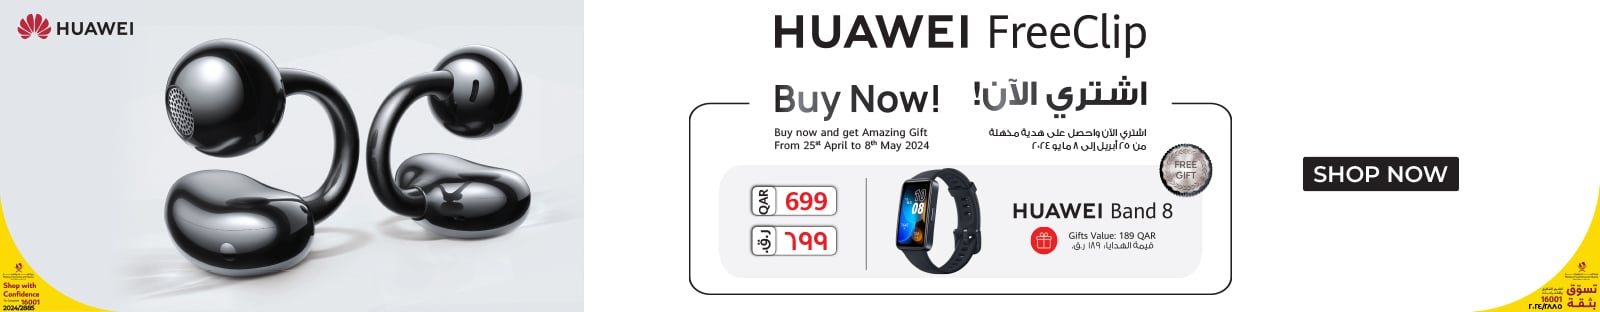 Huawei Free Clip - Shop Now (Web)